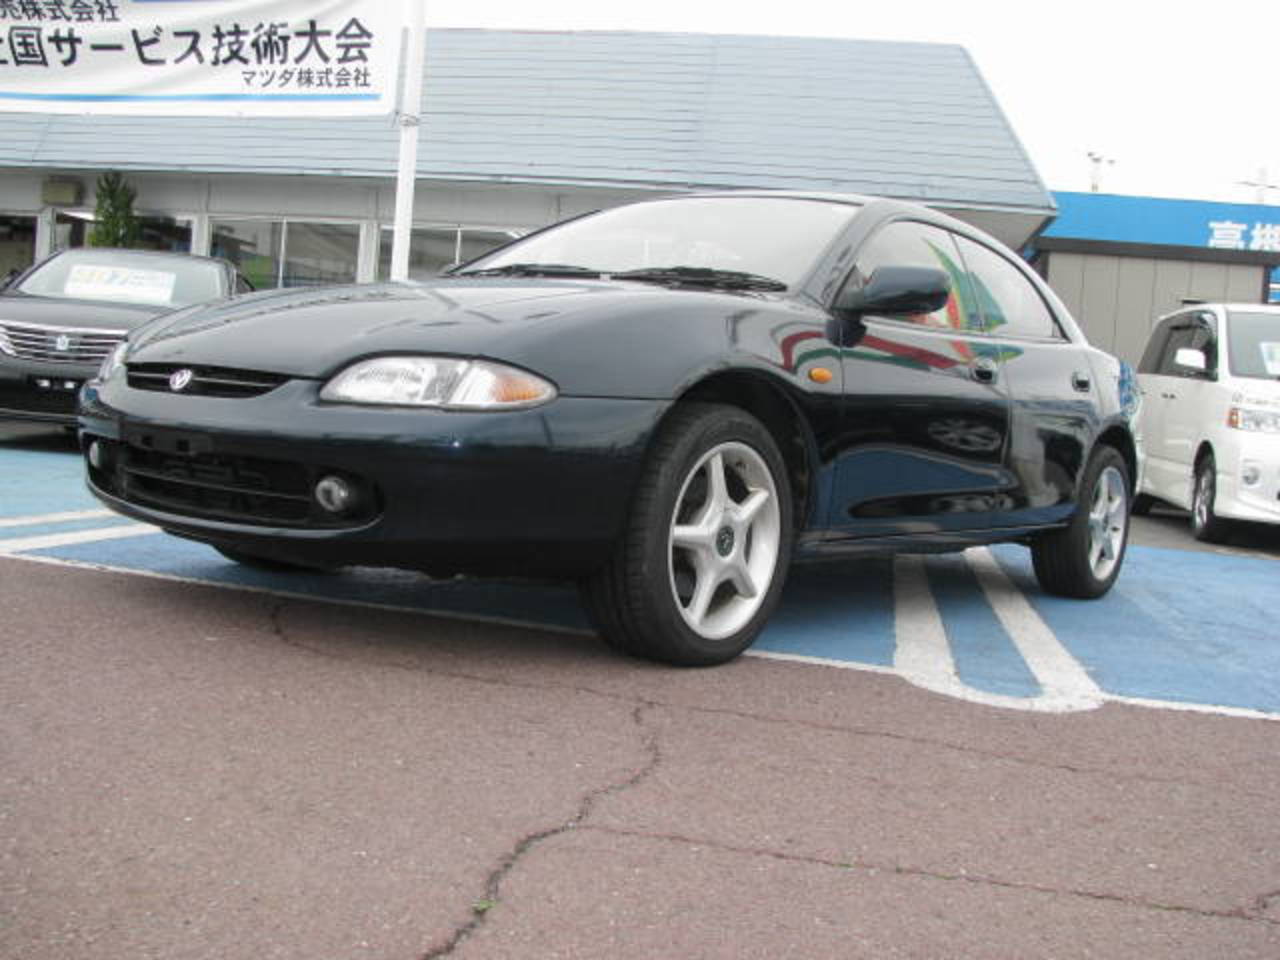 Mazda Lantis R 18i. View Download Wallpaper. 640x480. Comments